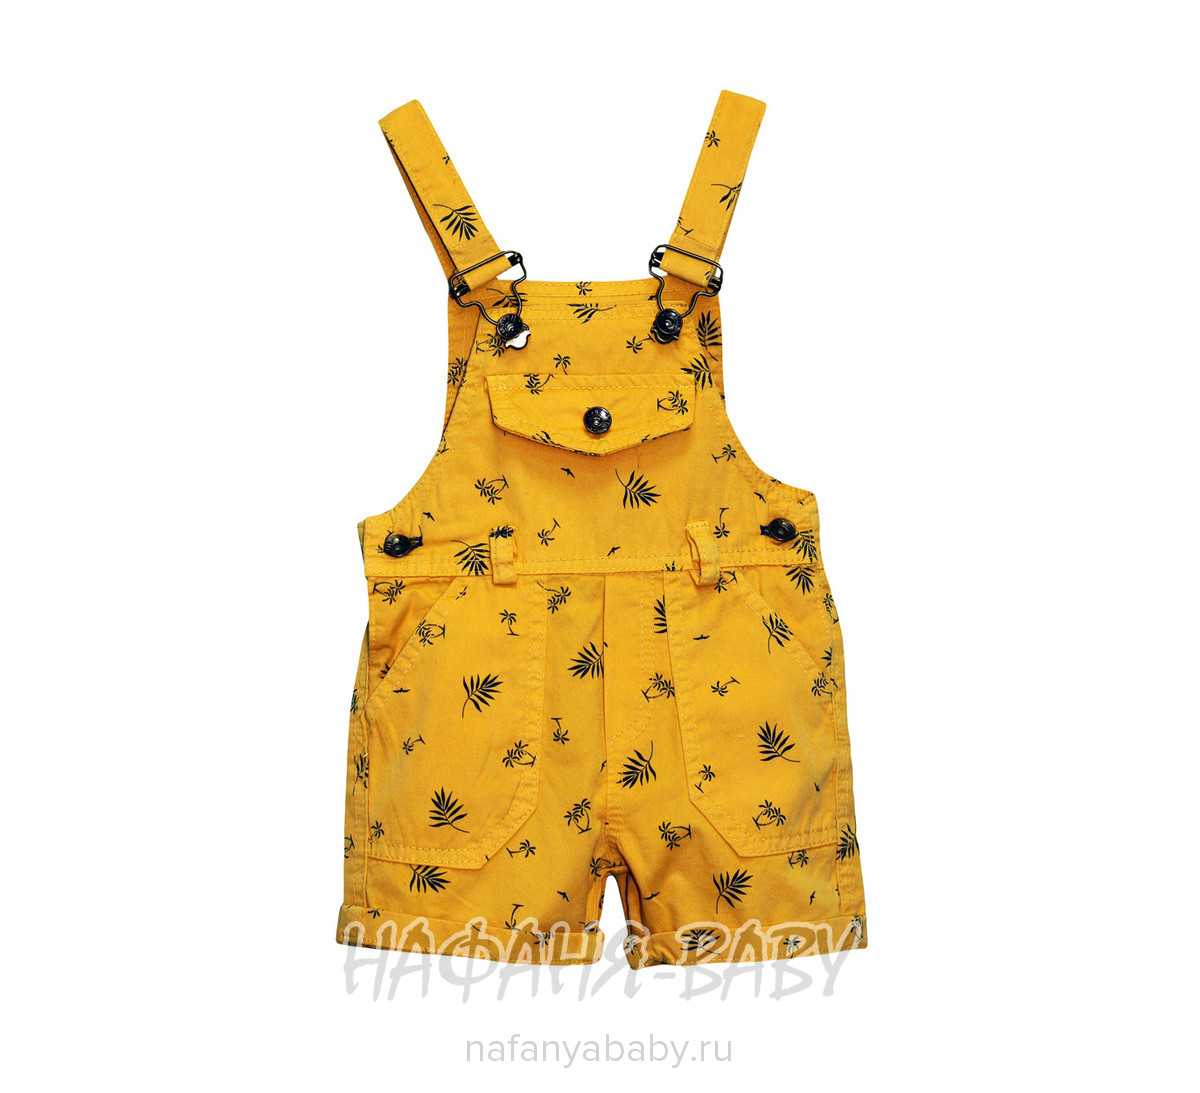 Детские полукомбинезон-шорты ORYEDA арт: 1053, 0-12 мес, 1-4 года, цвет горчичный, оптом Турция